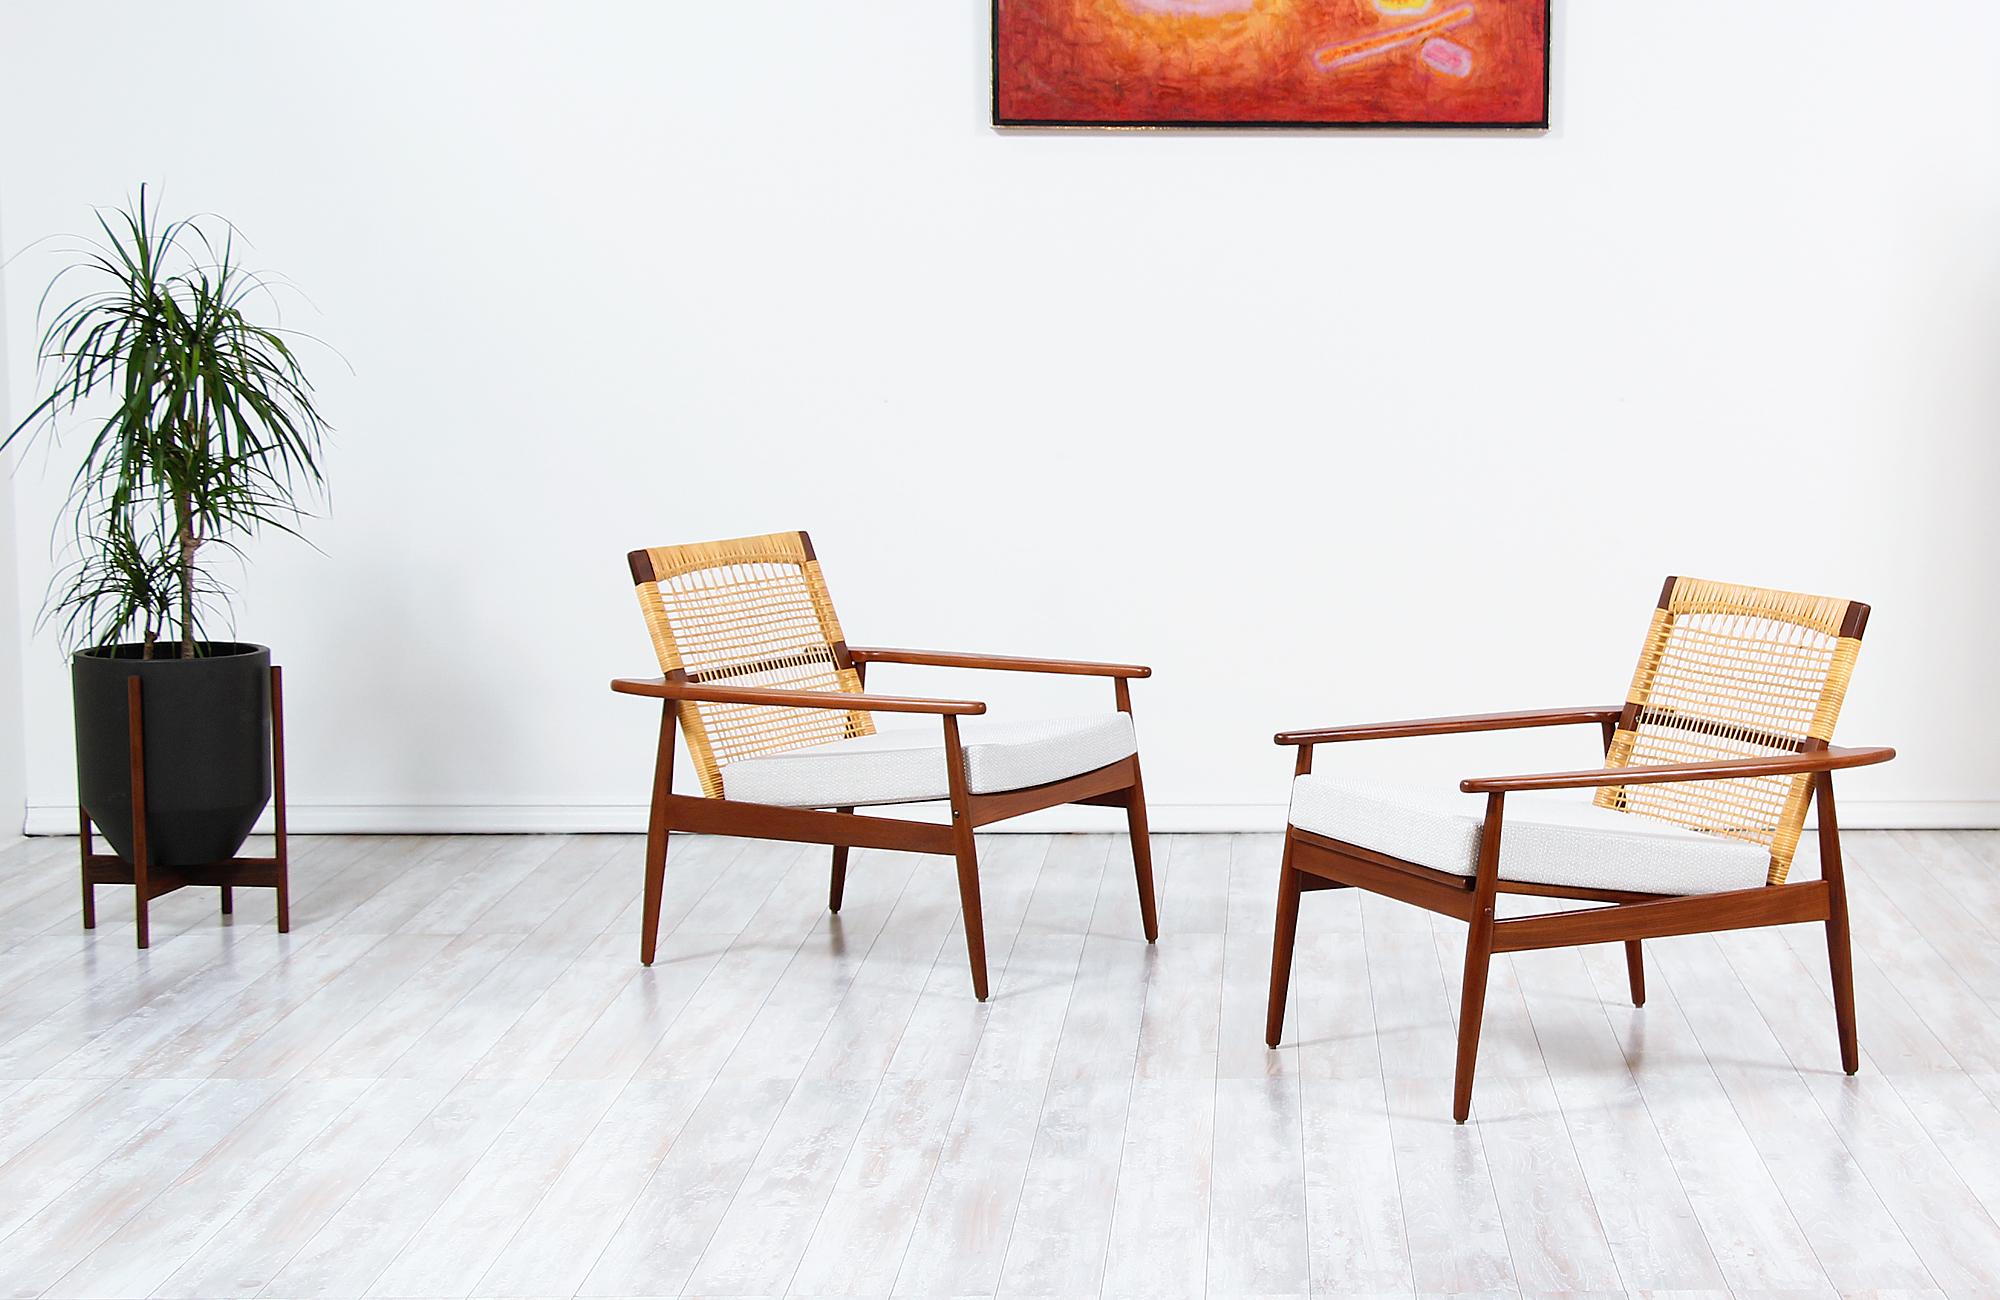 Mid-20th Century Danish Modern Teak and Cane Lounge Chair by Hans Olsen for Juul Kristensen